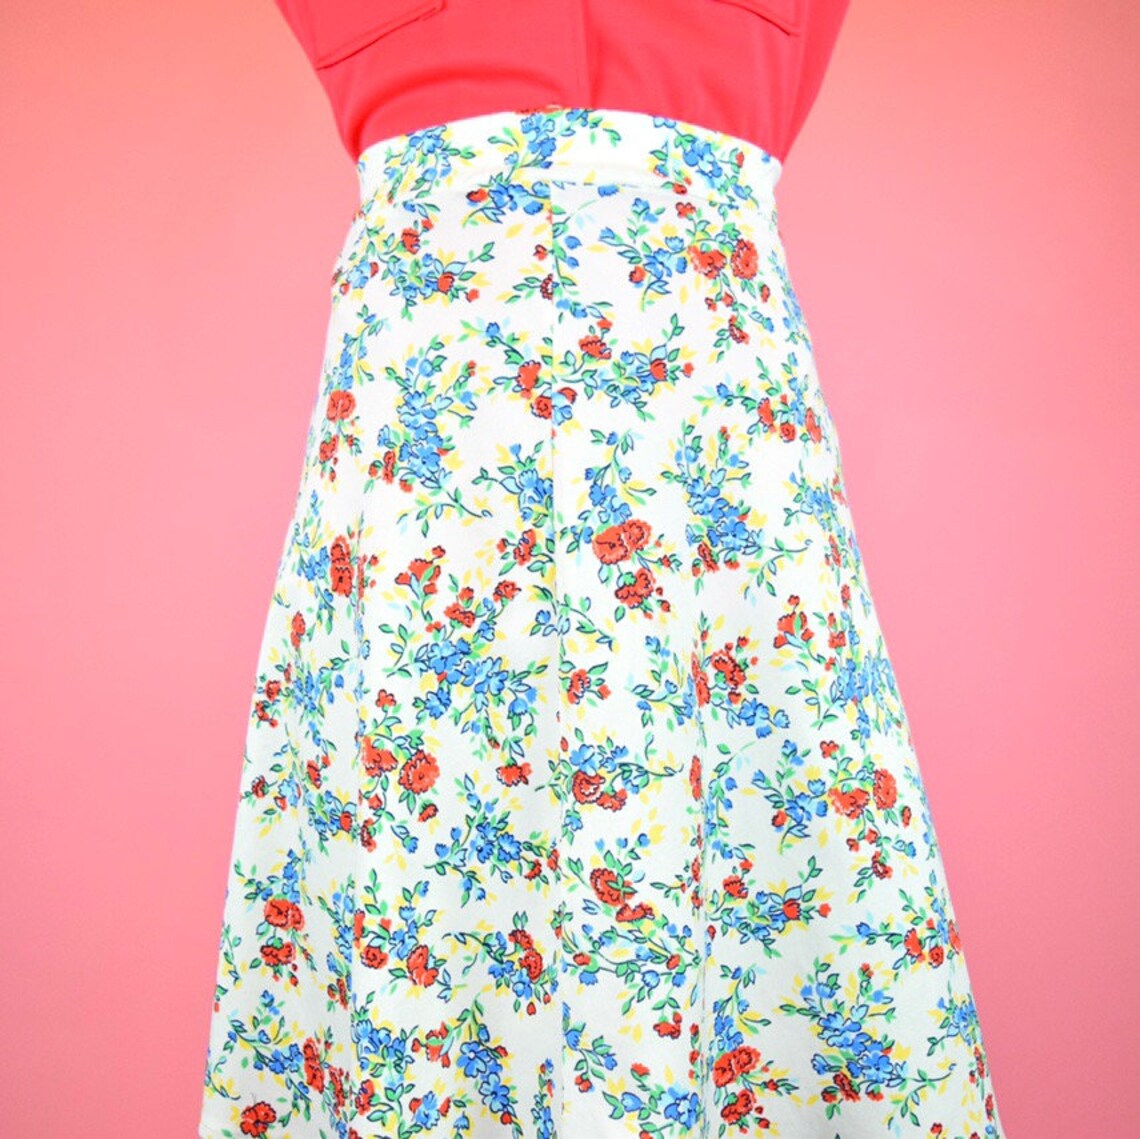 Vintage 60s floral circle skirt | Etsy